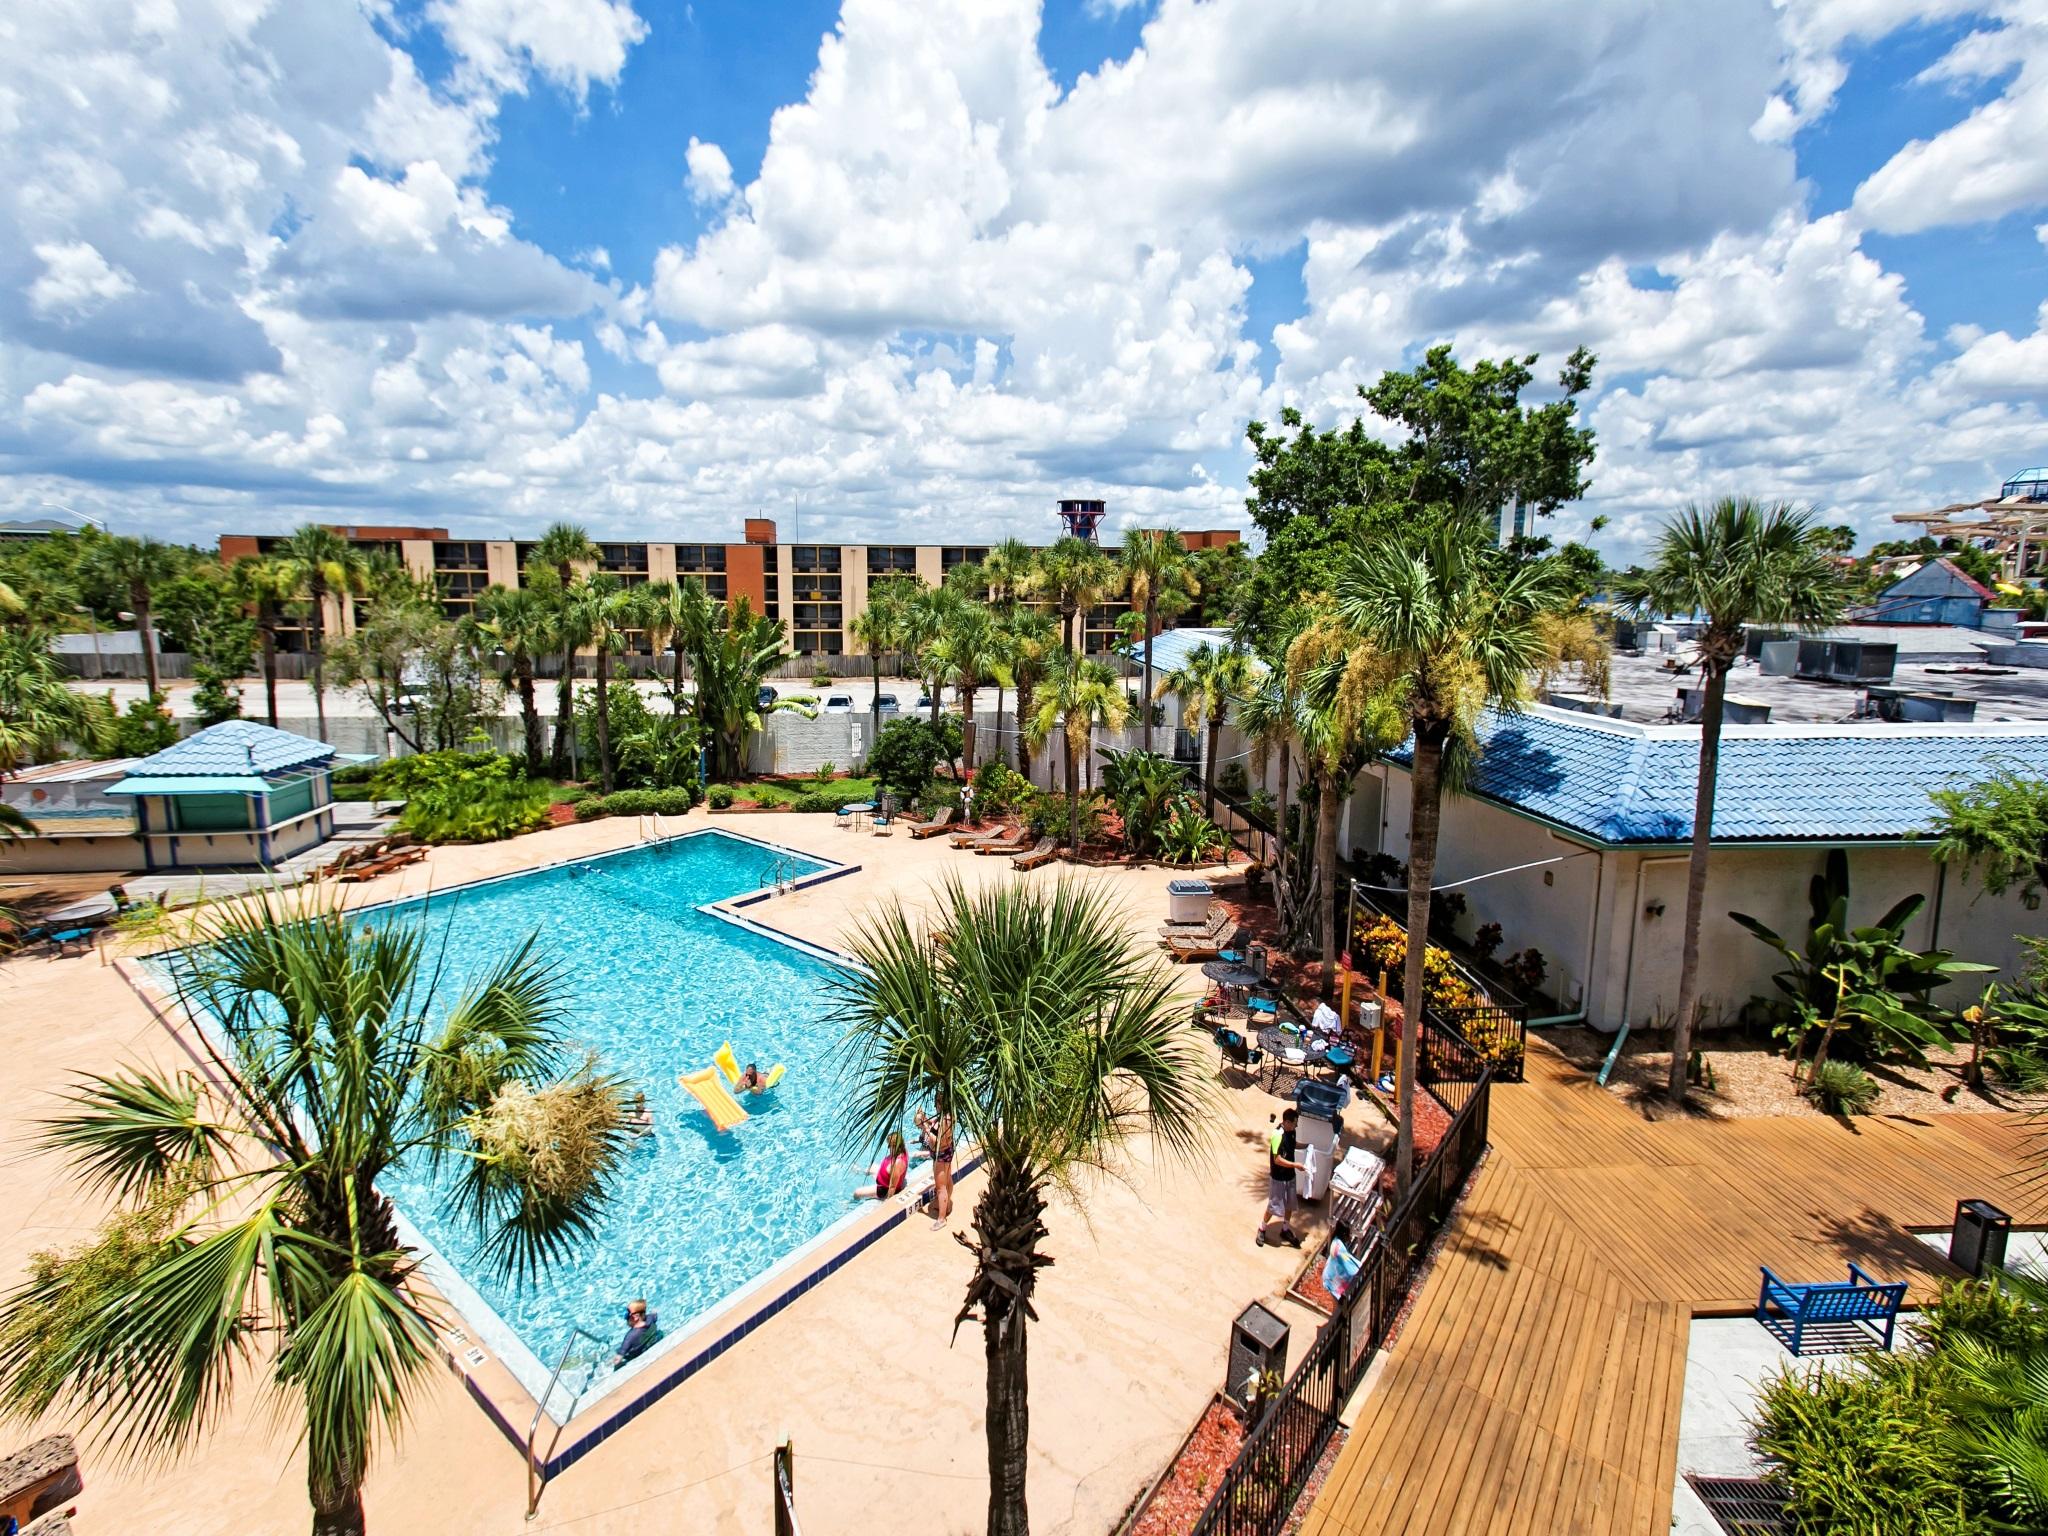 Monumental Movieland Hotel Orlando Bagian luar foto